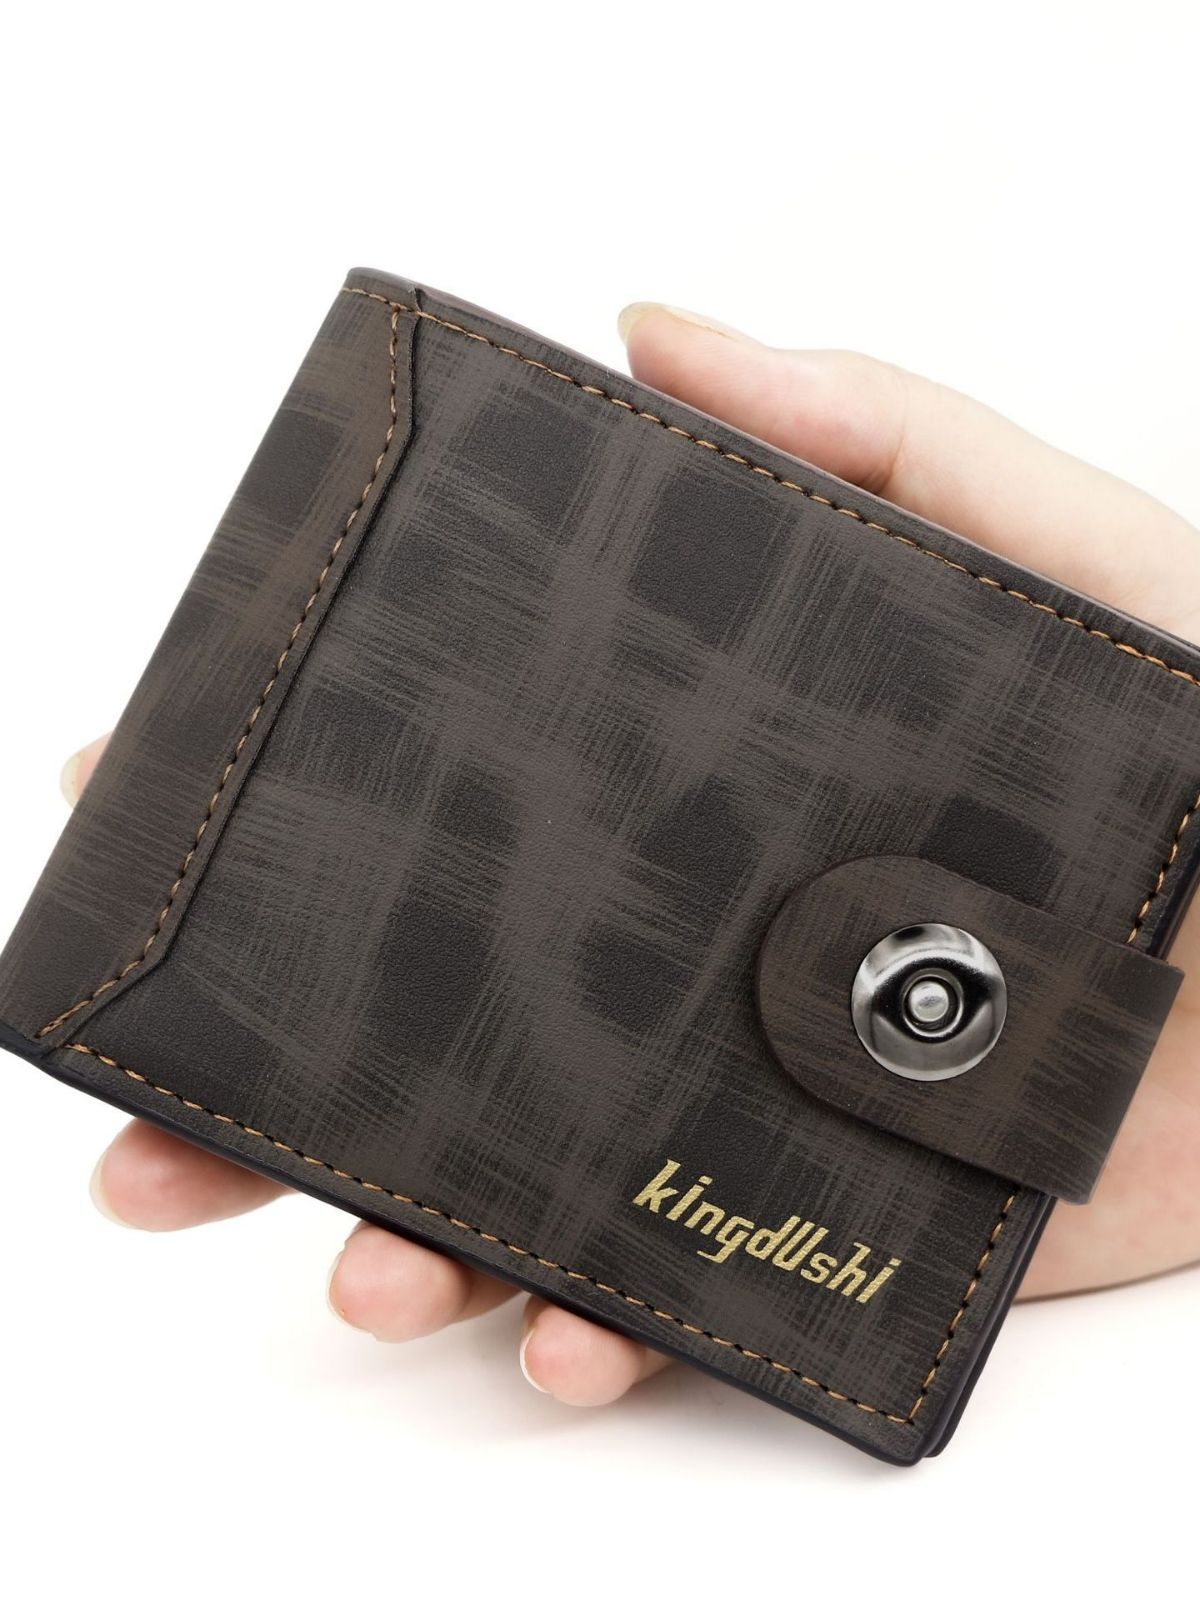 B419-1 Fashion Men Credit Card ATM Card Holder Slim PU Leather Pull Tab Minimalist Wallet